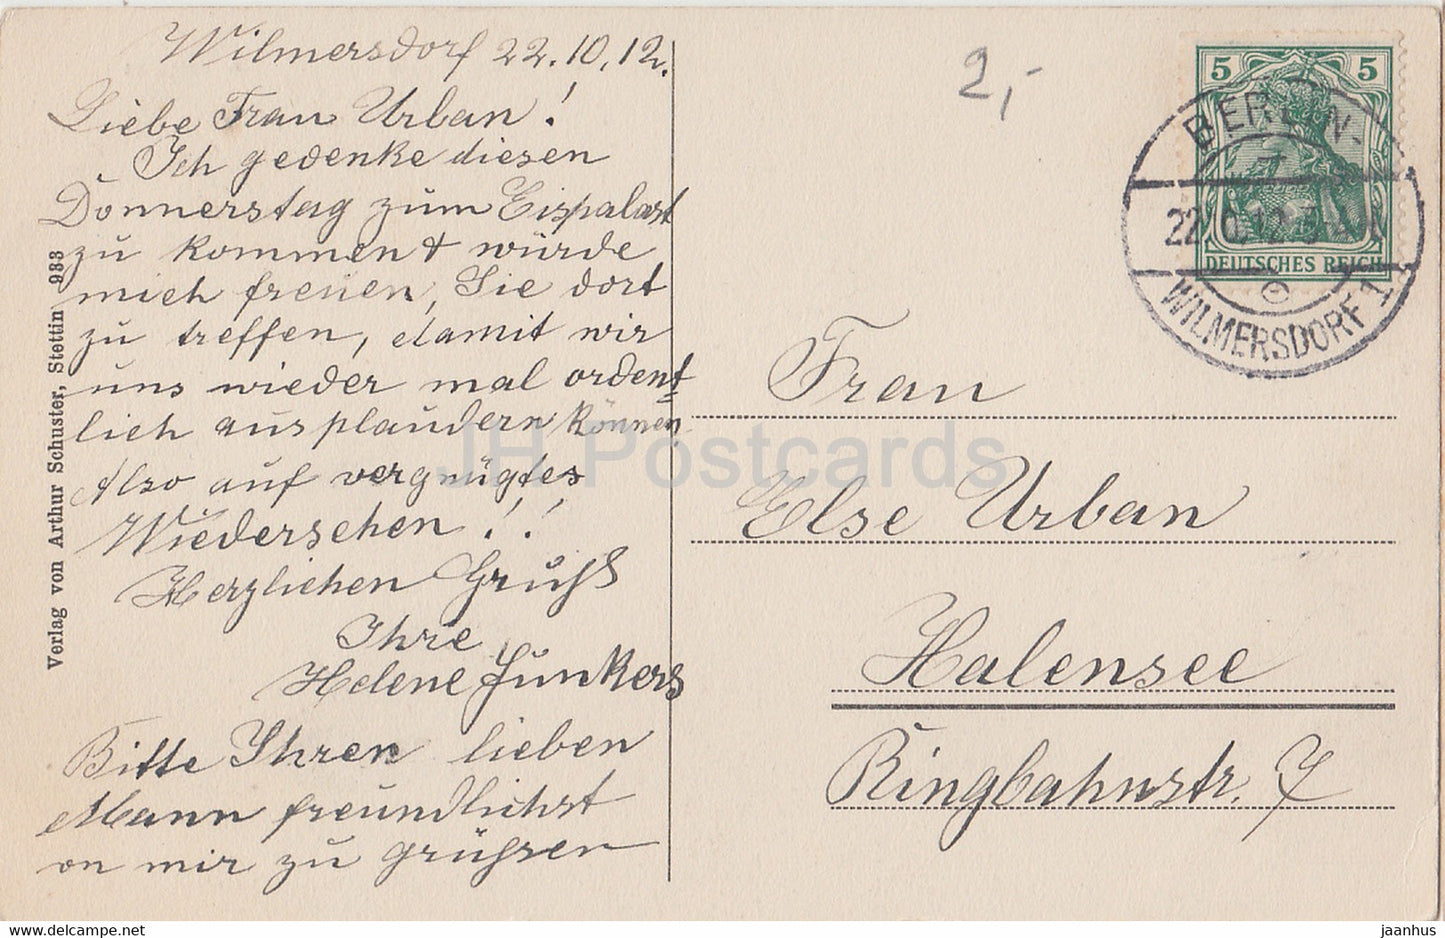 Bornholm - Trappen ved Johns Kapel - alte Postkarte - 1912 - Dänemark - gebraucht